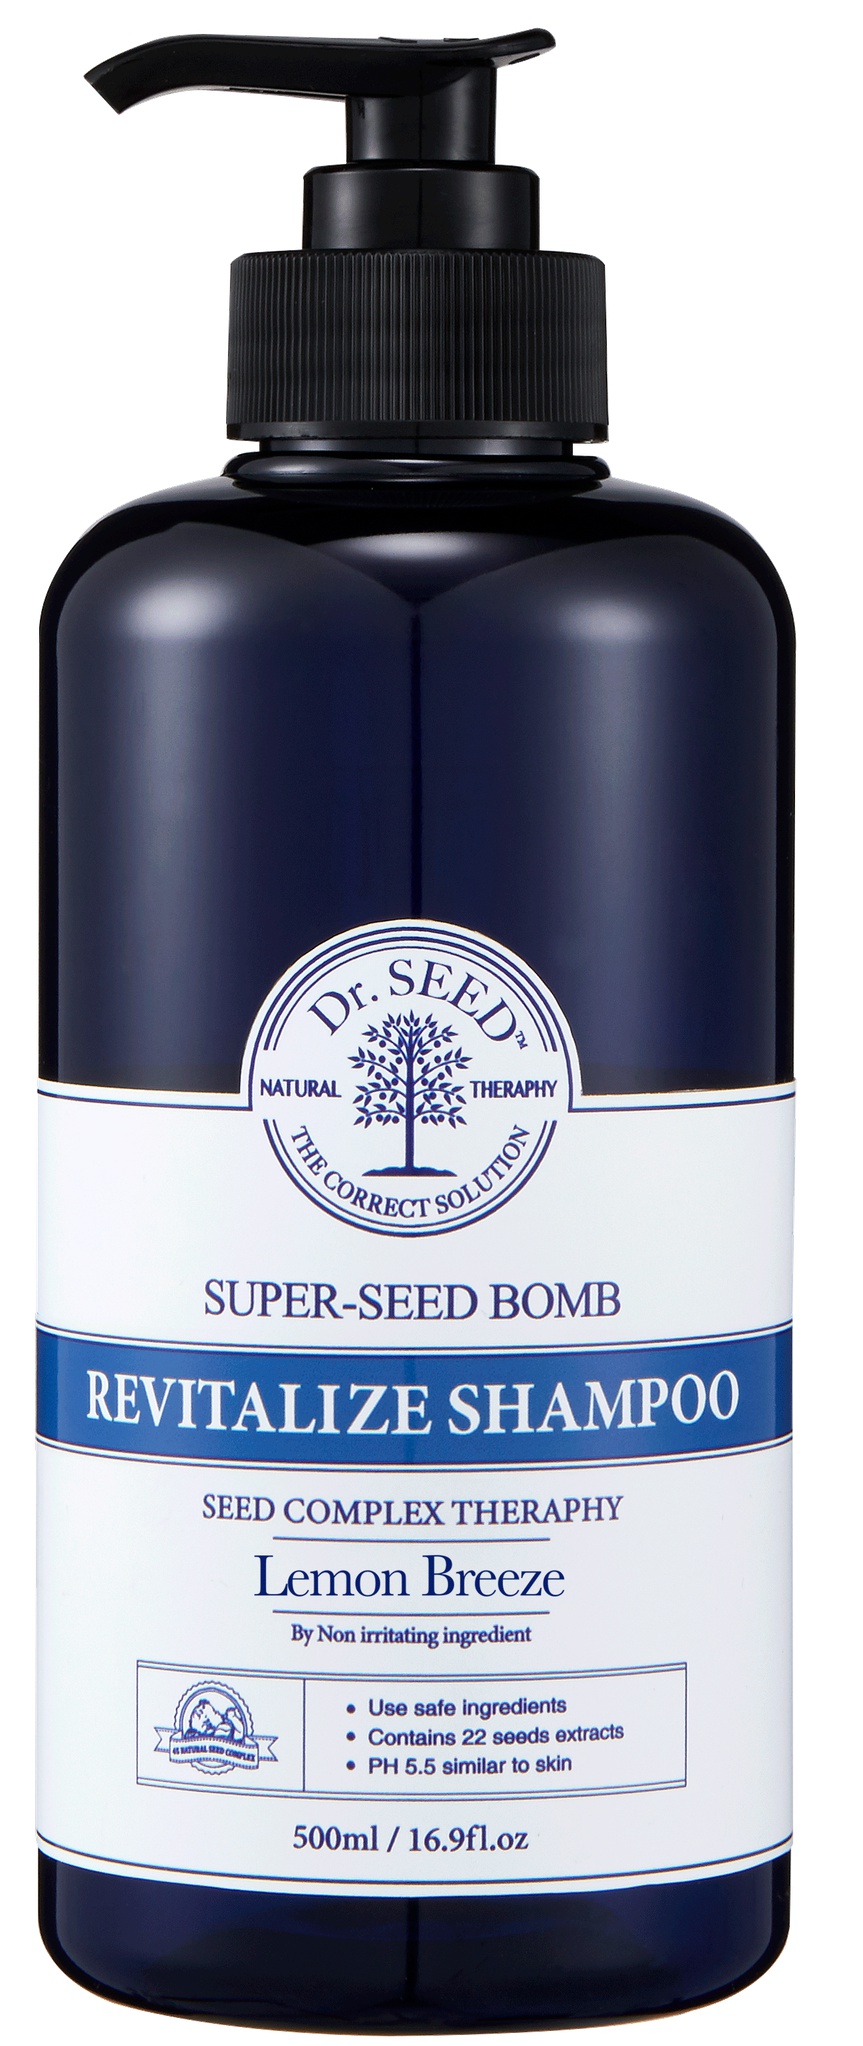 Dr. Seed Super Seed Bomb Lemon Breeze Revitalizing Shampoo